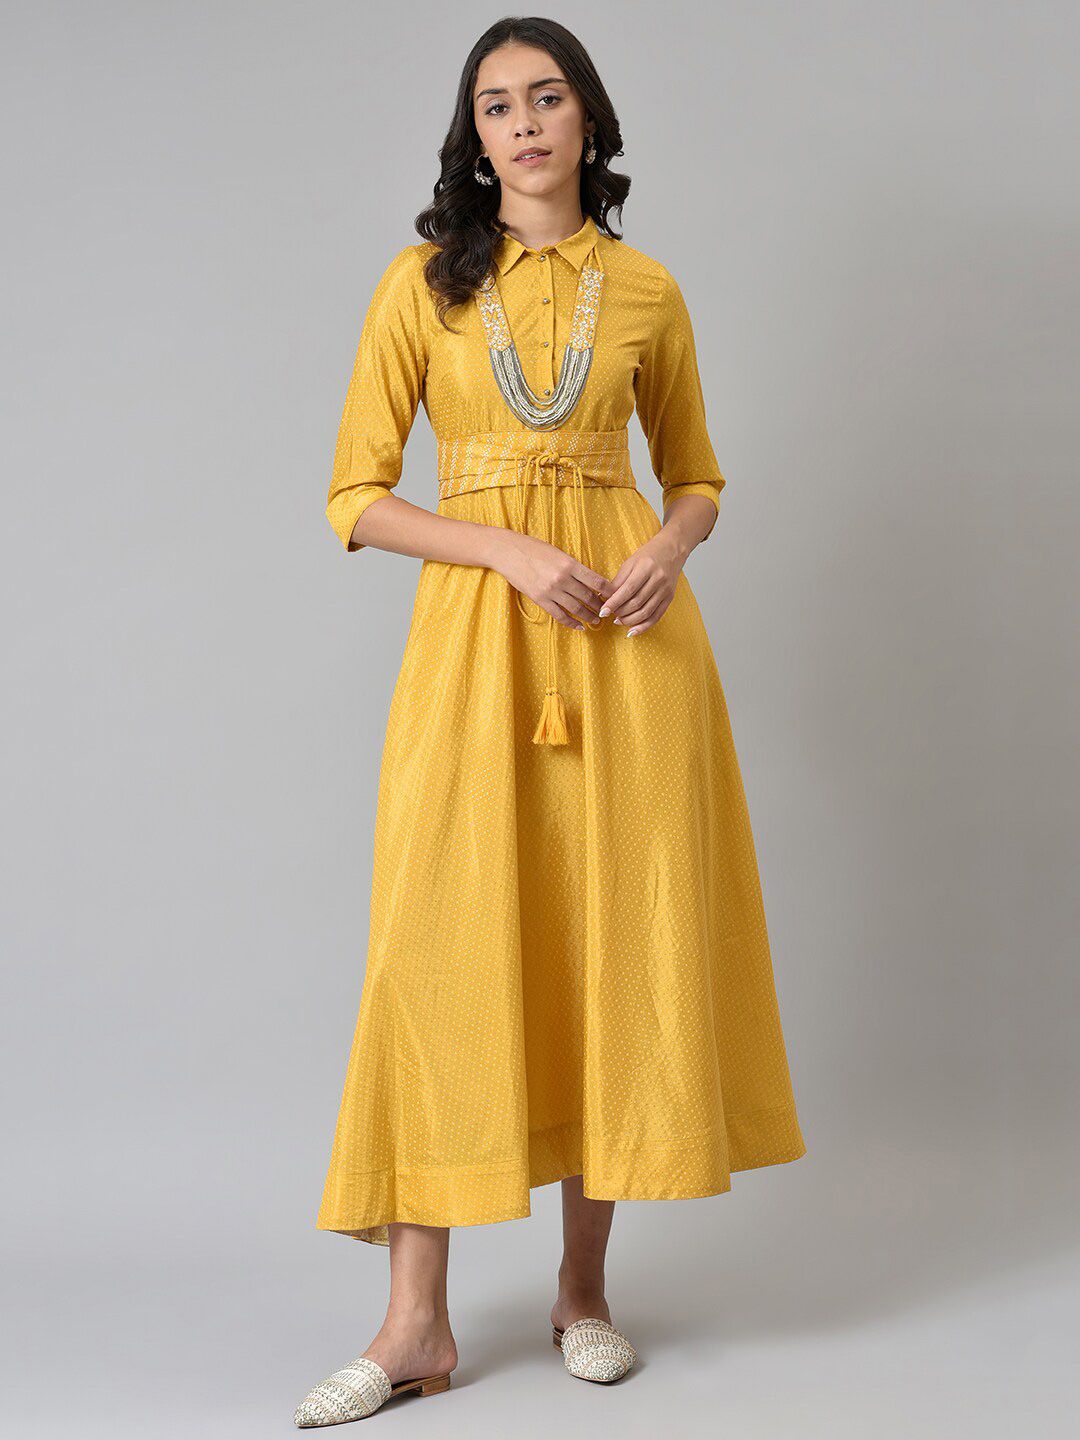 W Yellow Ethnic Motifs Tie-Up Neck Satin Ethnic Midi Dress Price in India